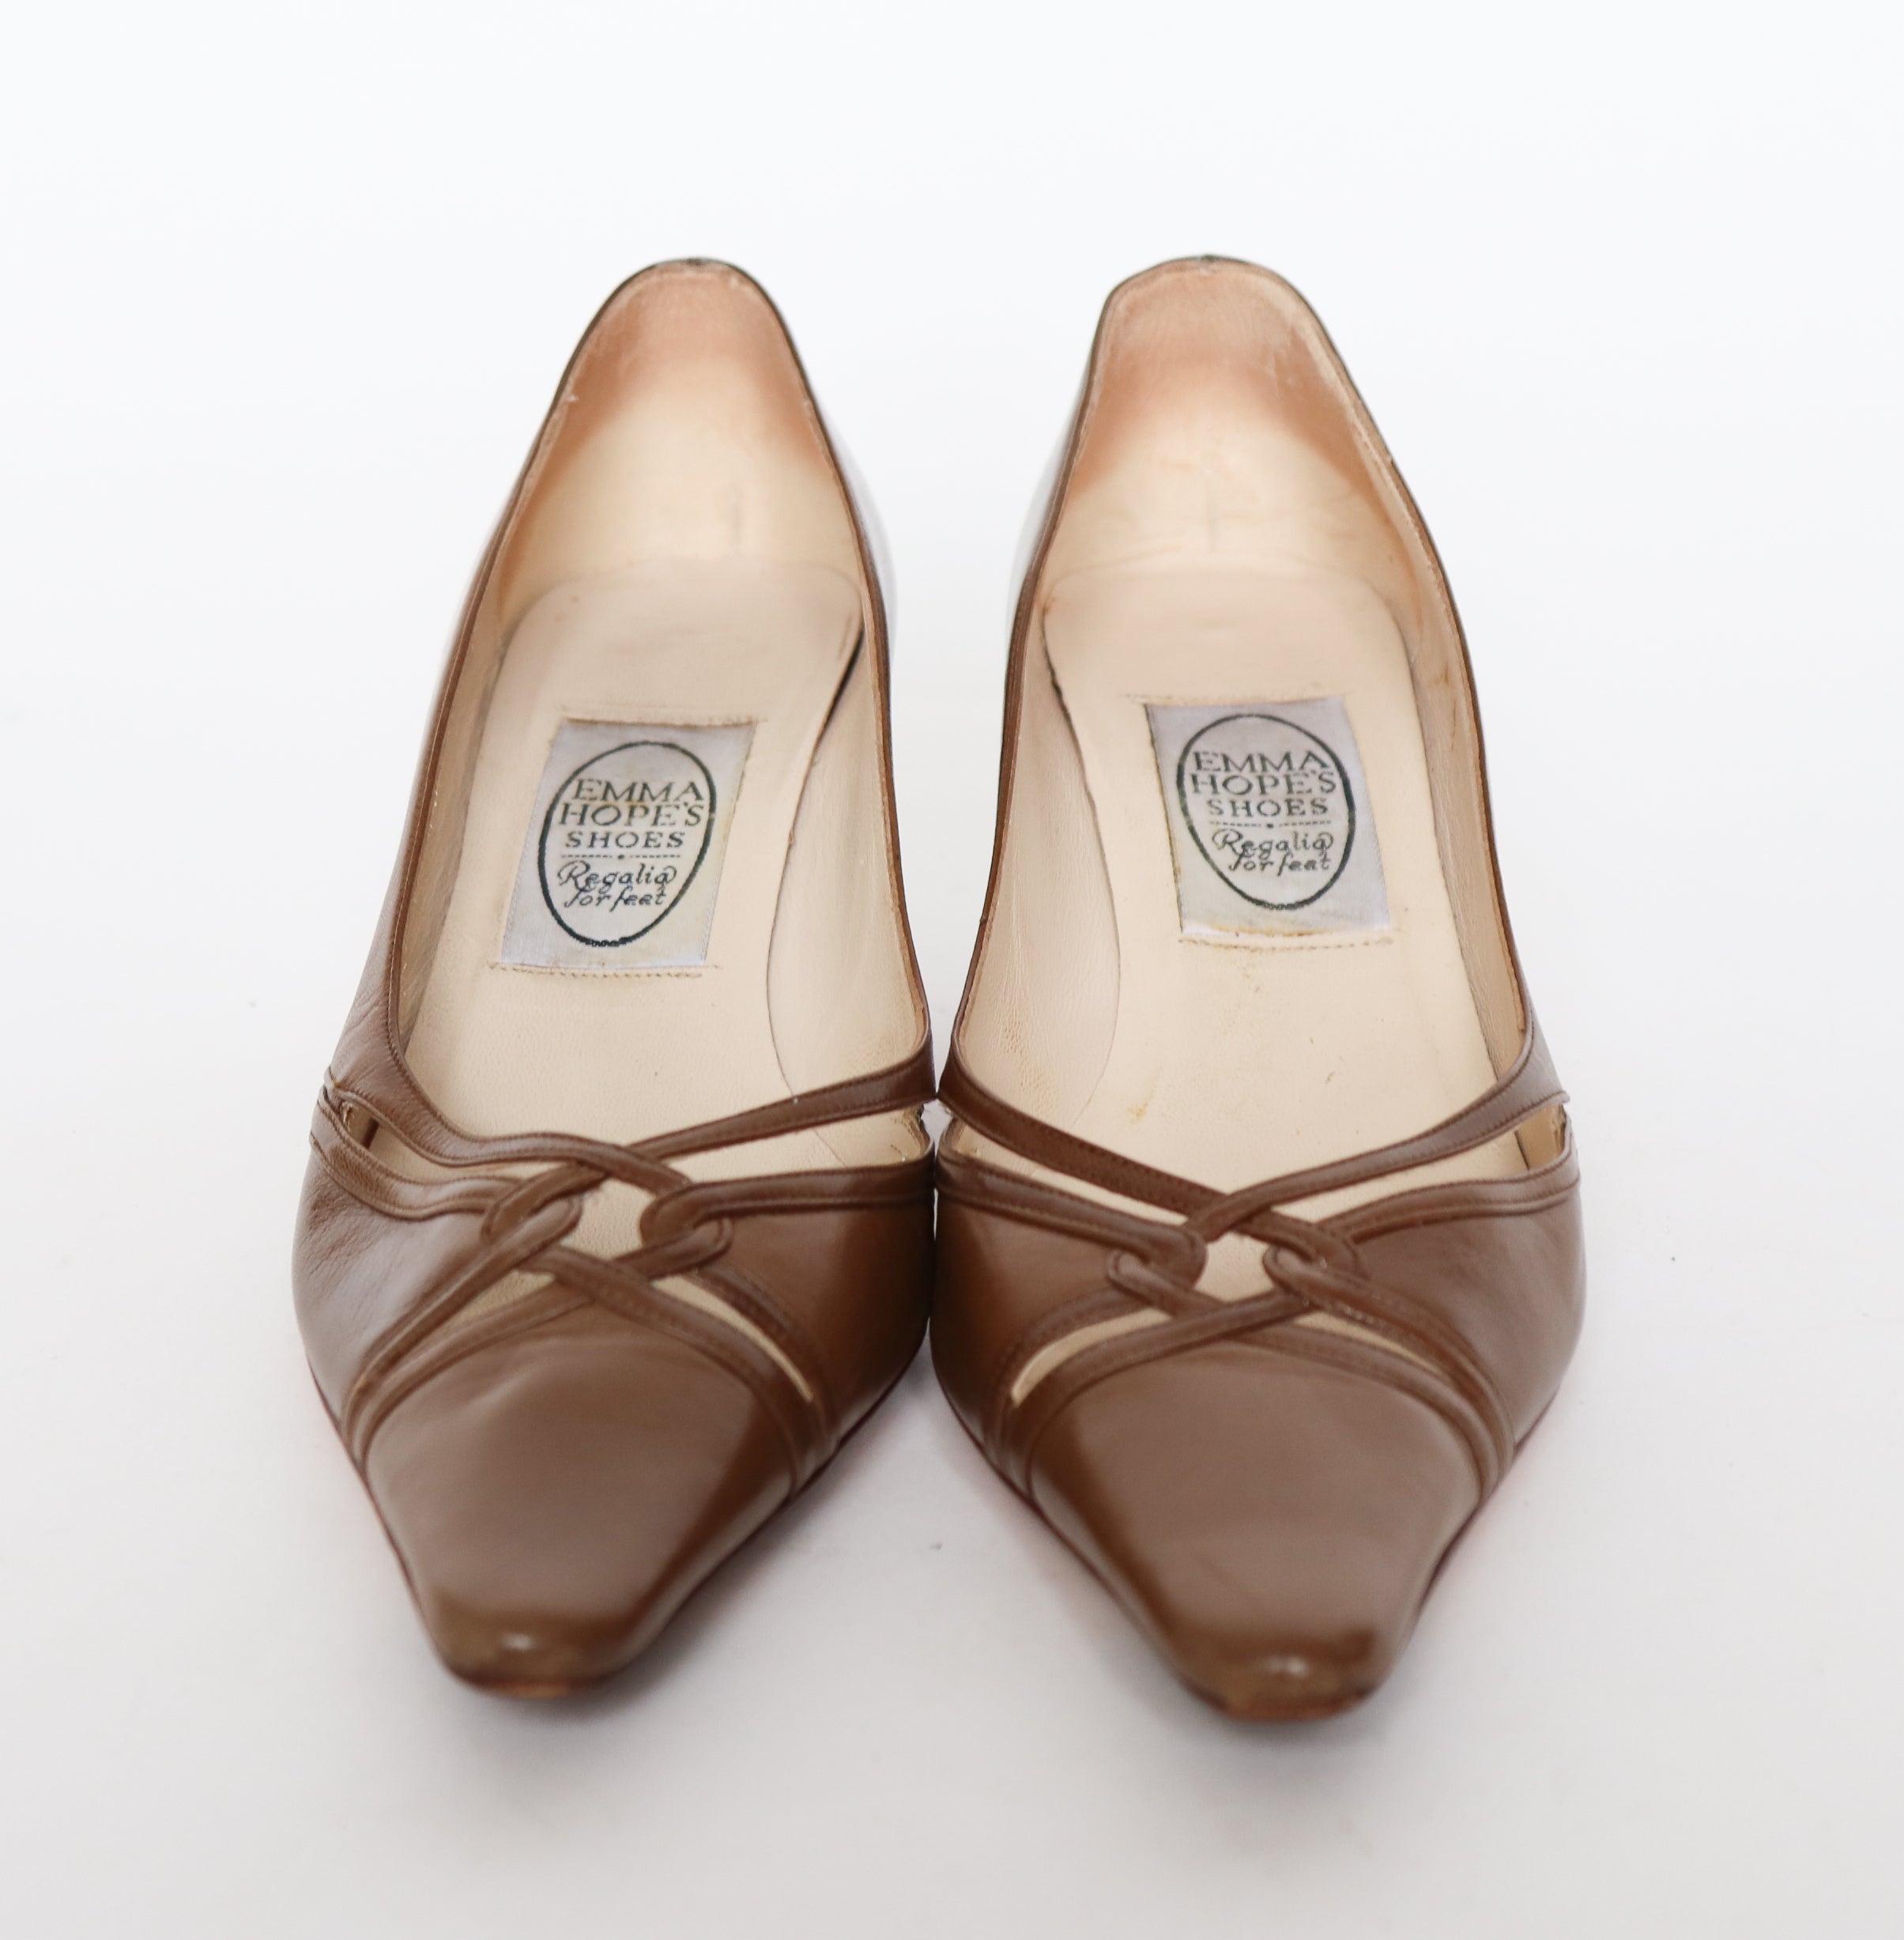 Emma Hope Kitten Heel Pumps /  Shoes - Leather - 38.5 / UK 5.55